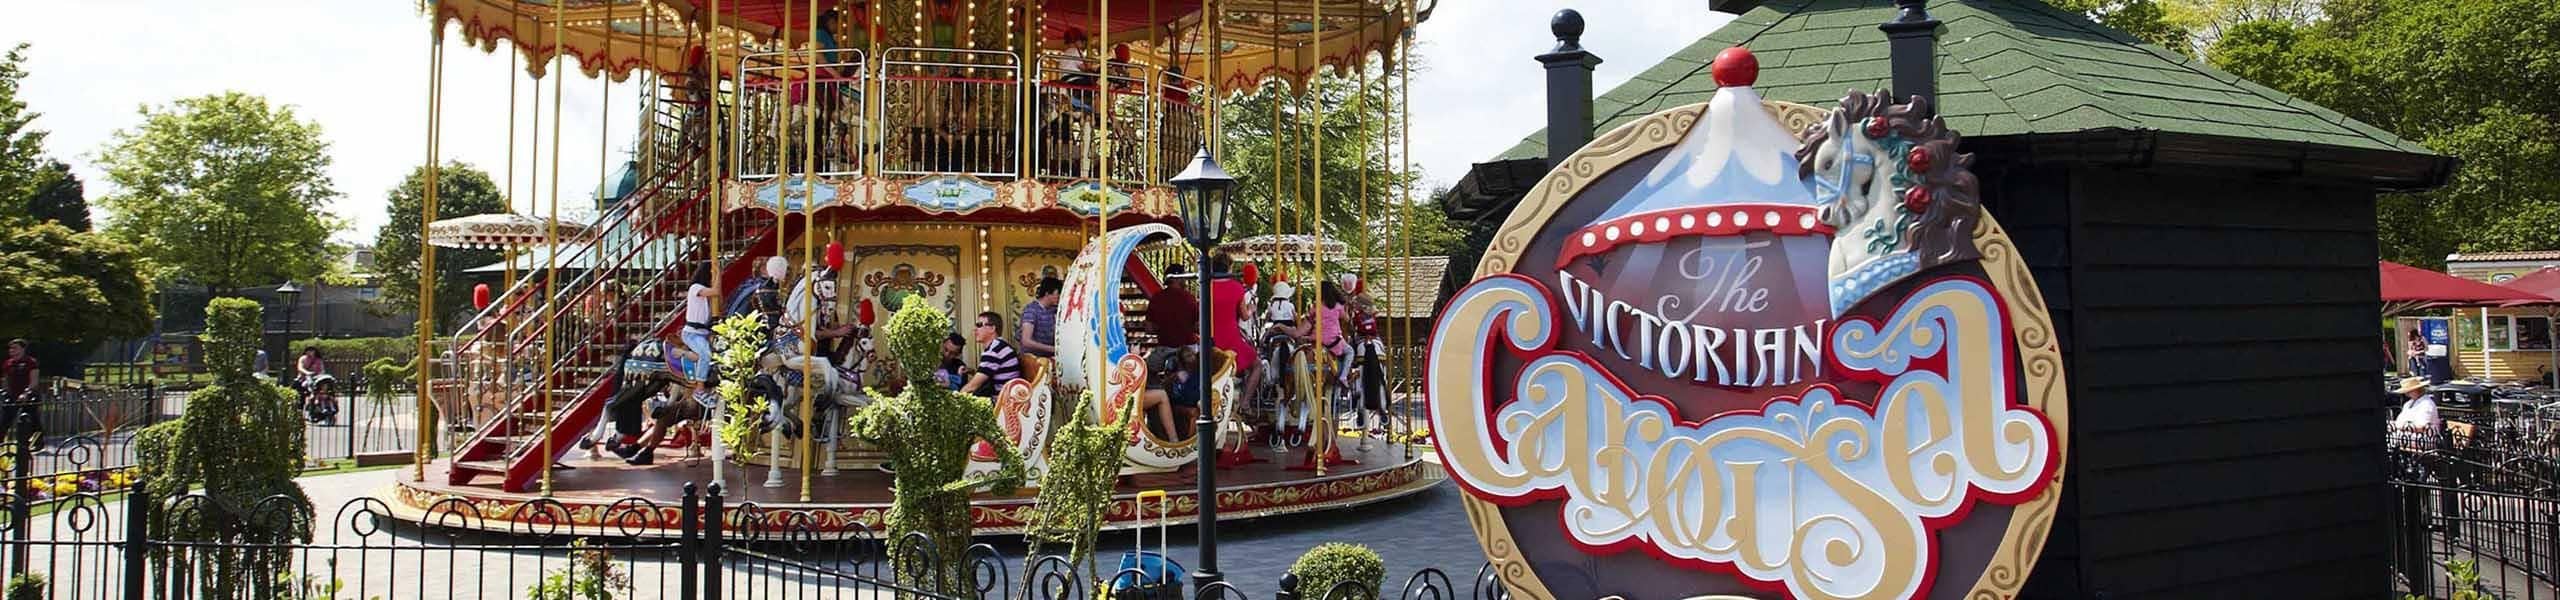 The Victorian Carousel | Paultons Park